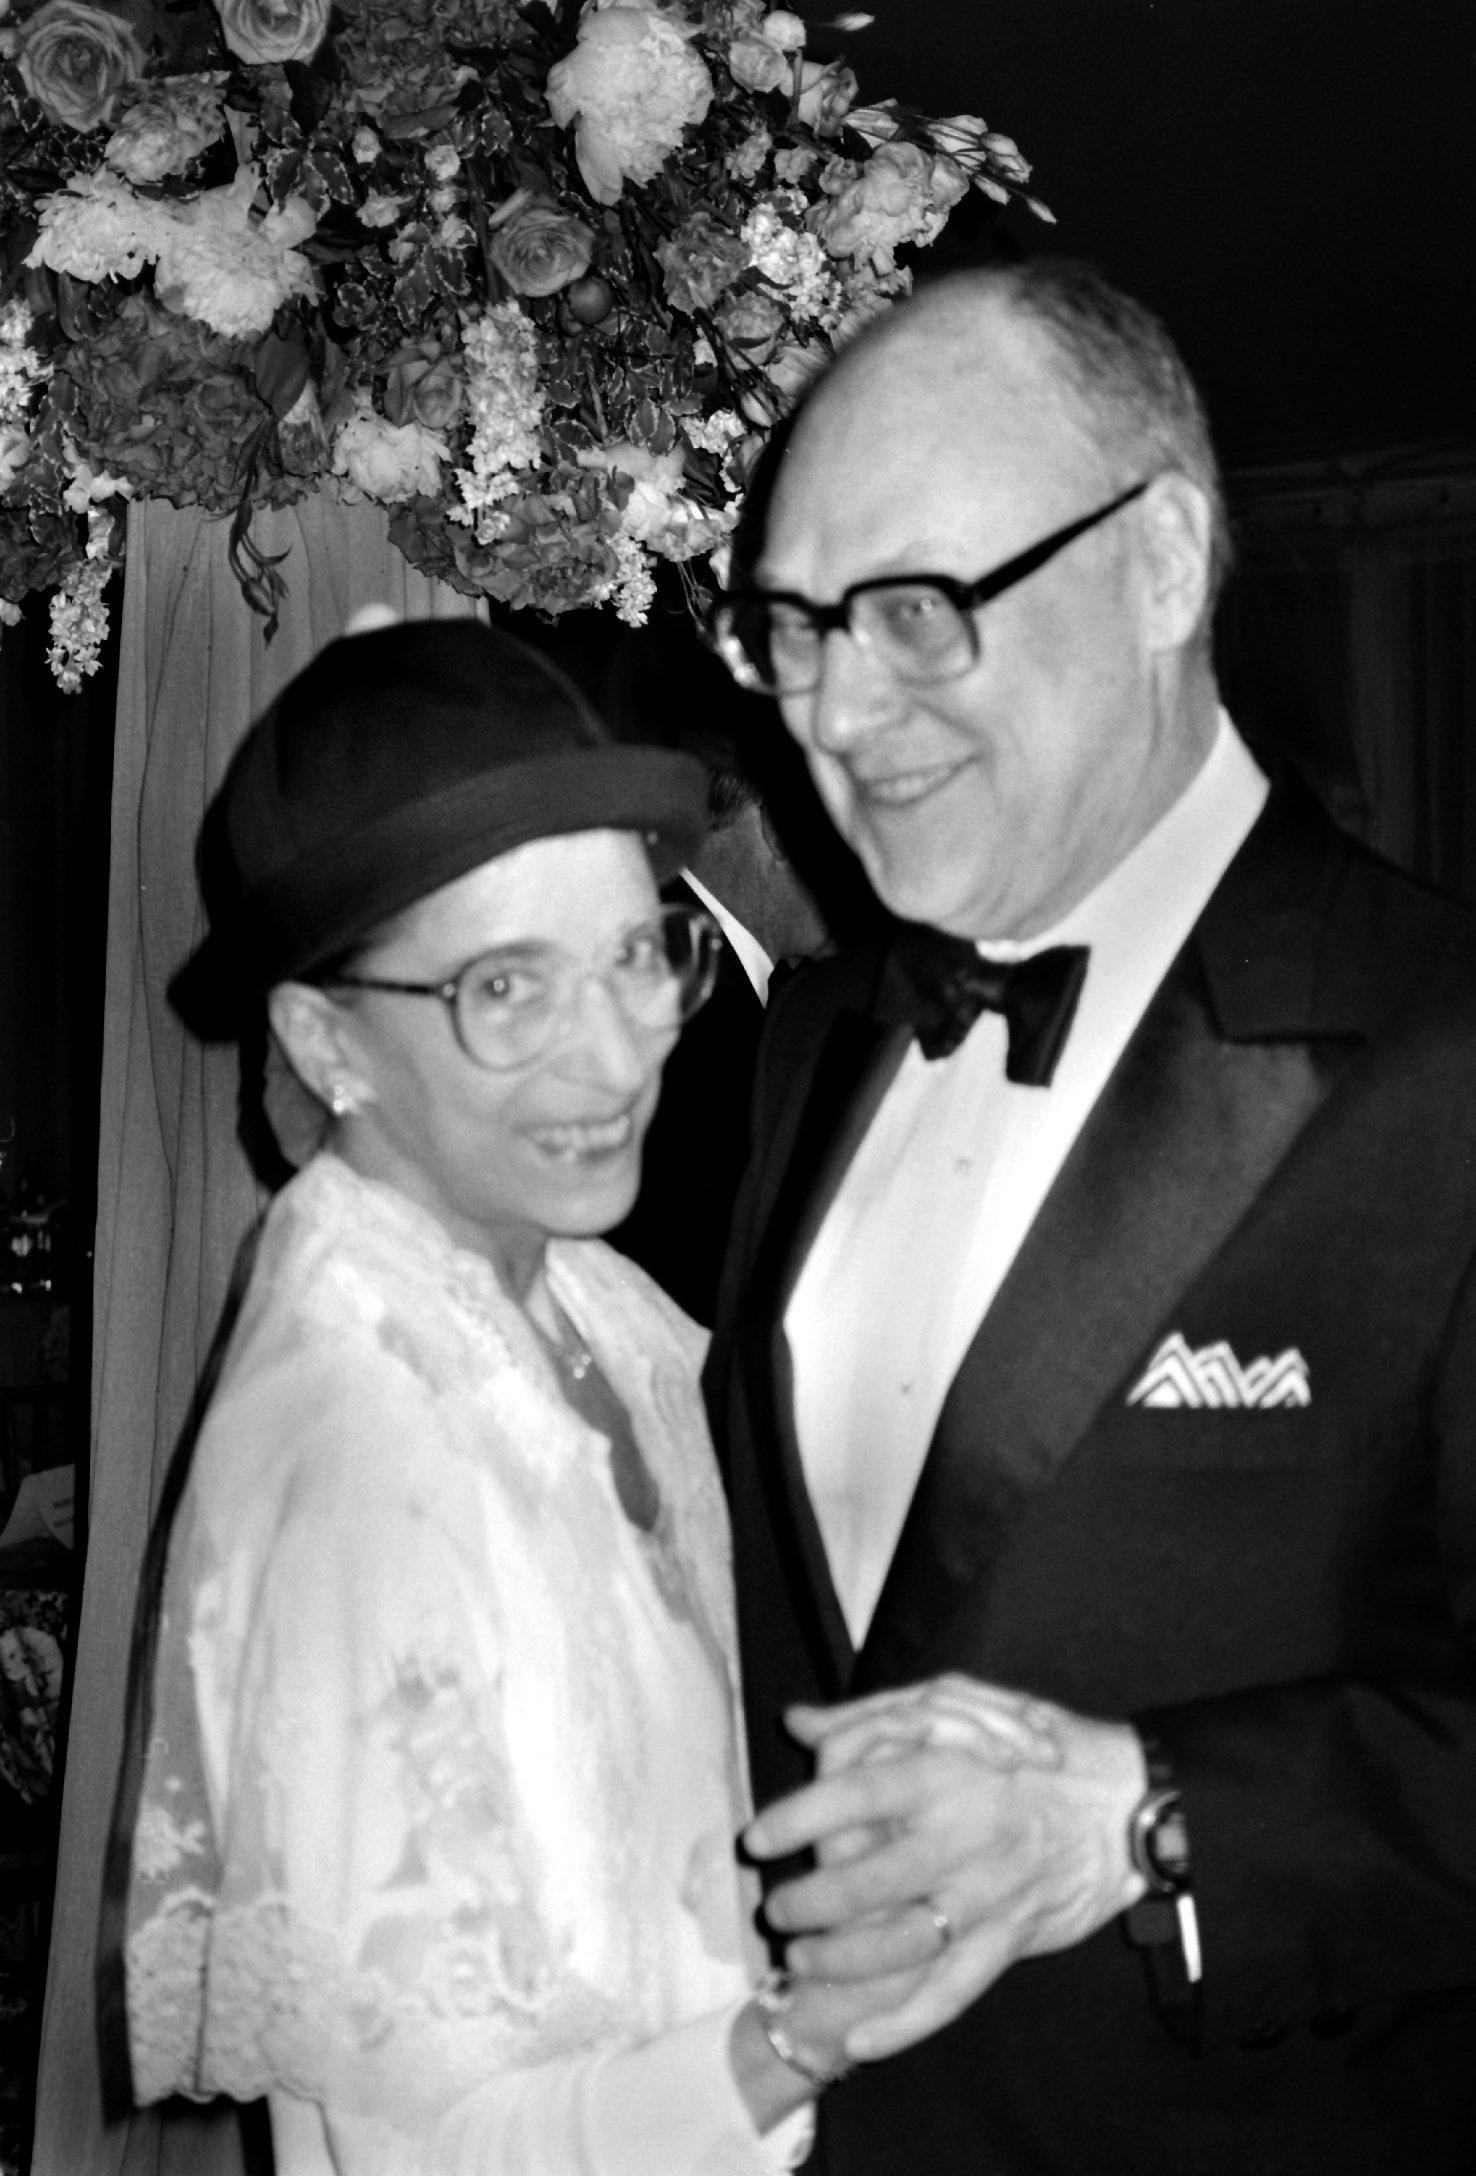 Ruth Bader Ginsburg and Martin Ginsburg at a formal event, Washington, DC. | Source: Getty Images